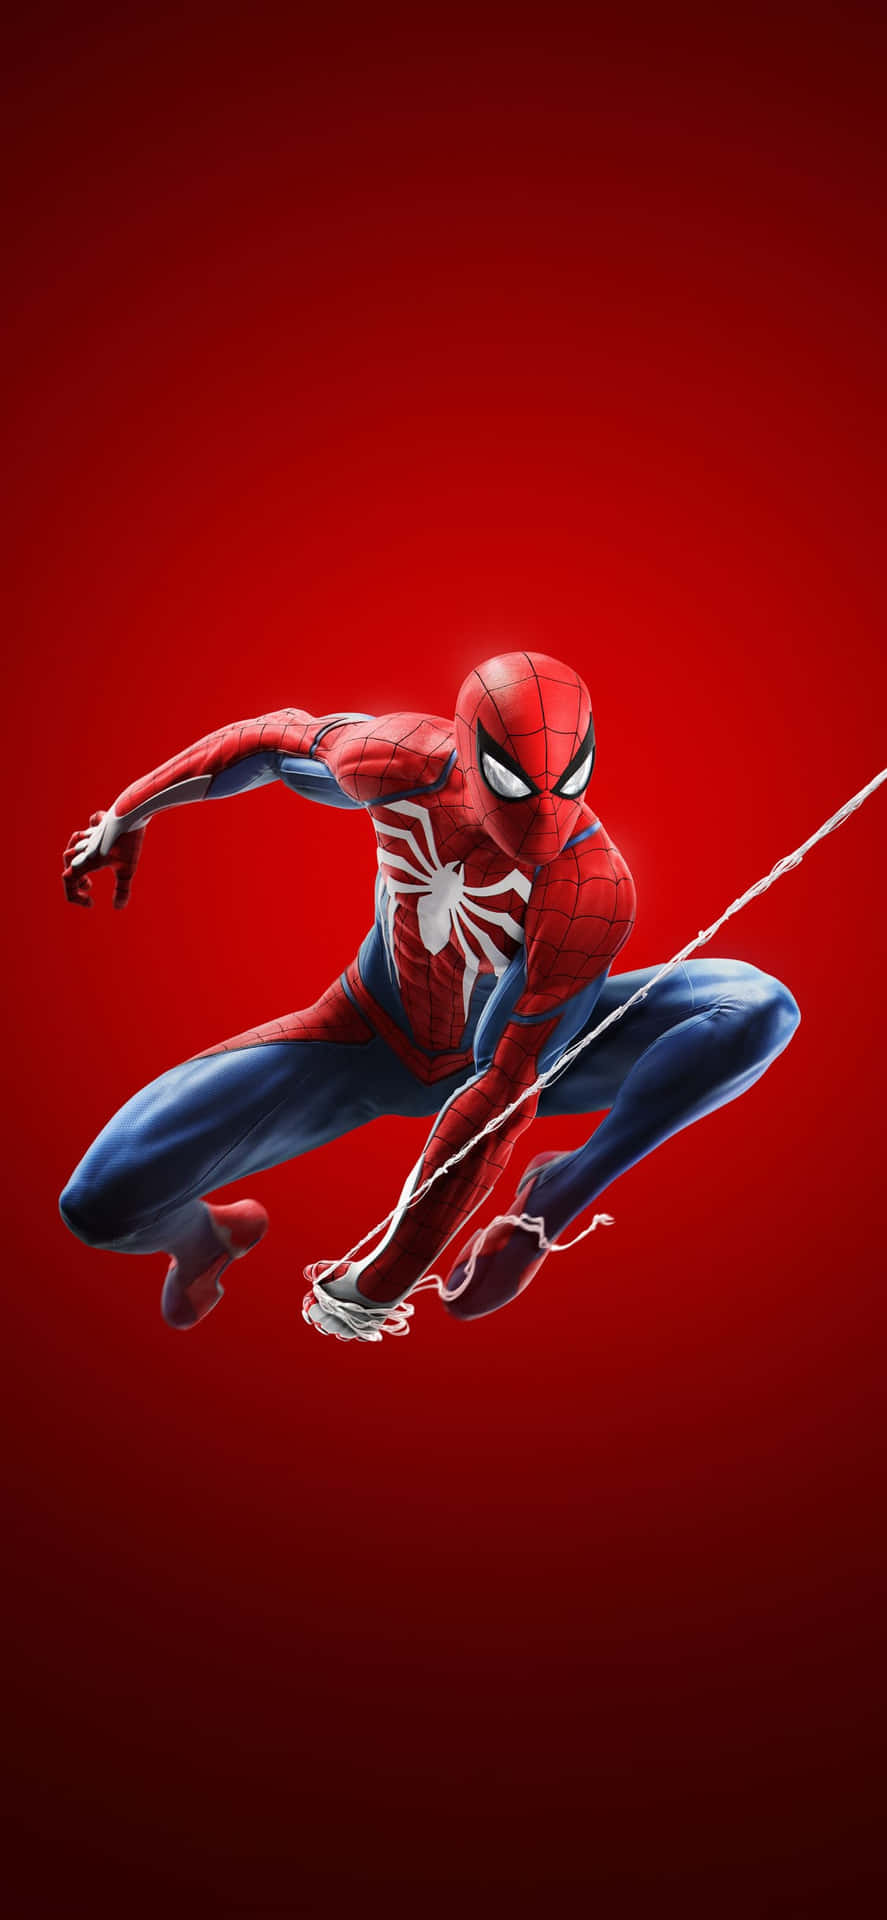 Feiertdas Ikonische Spider-man-design Wallpaper